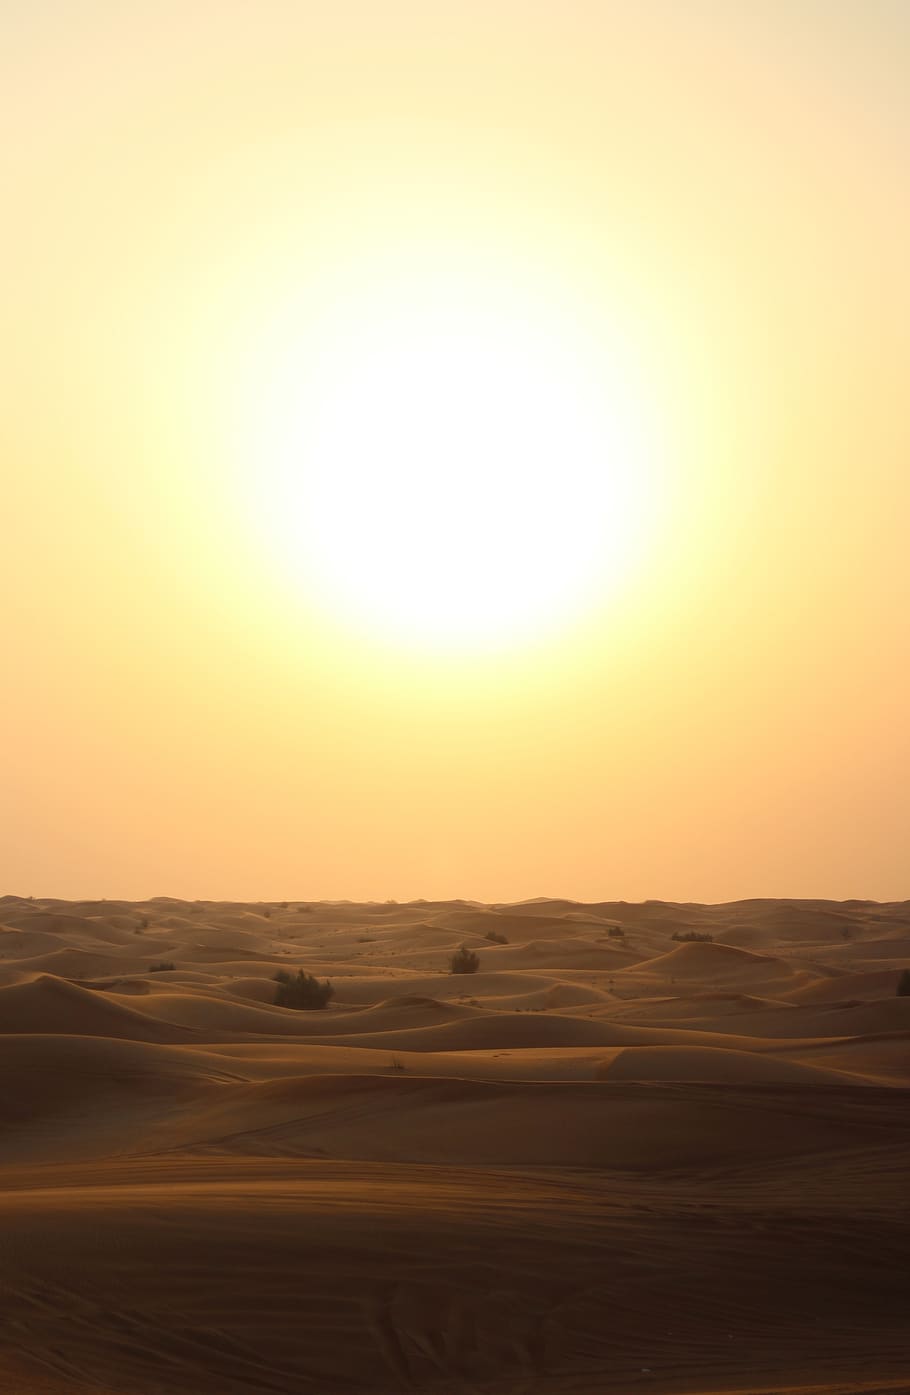 desert landscape, sunset, desert, landscape, sky, sand, dry, orange, outdoor, sunset landscape